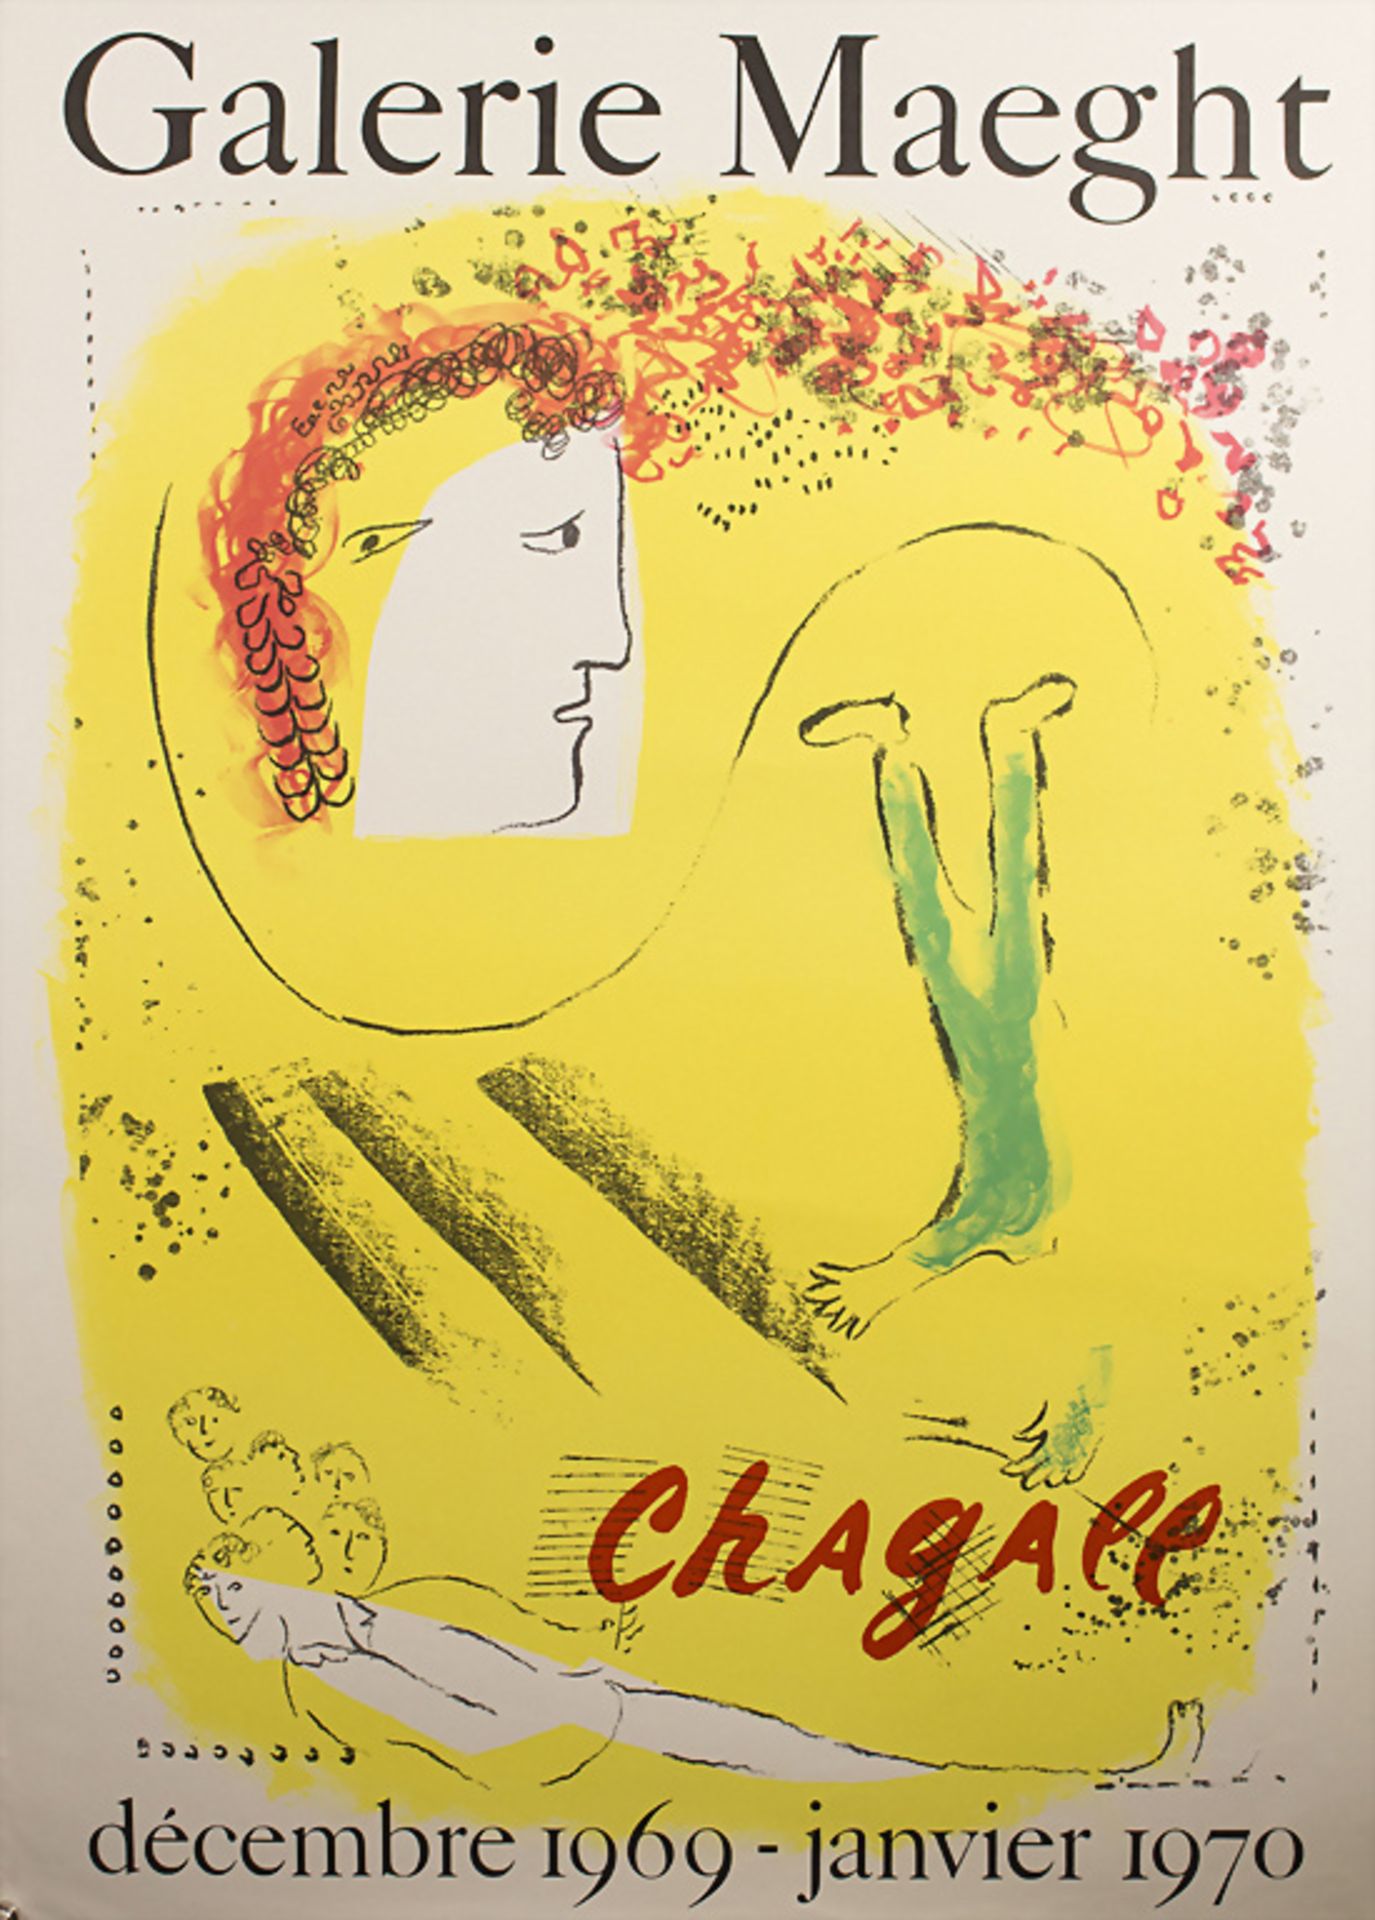 Marc CHAGALL (1887-1985), Ausstellungsplakat / Exhibition poster, Galerie Maeght, 1969-1970